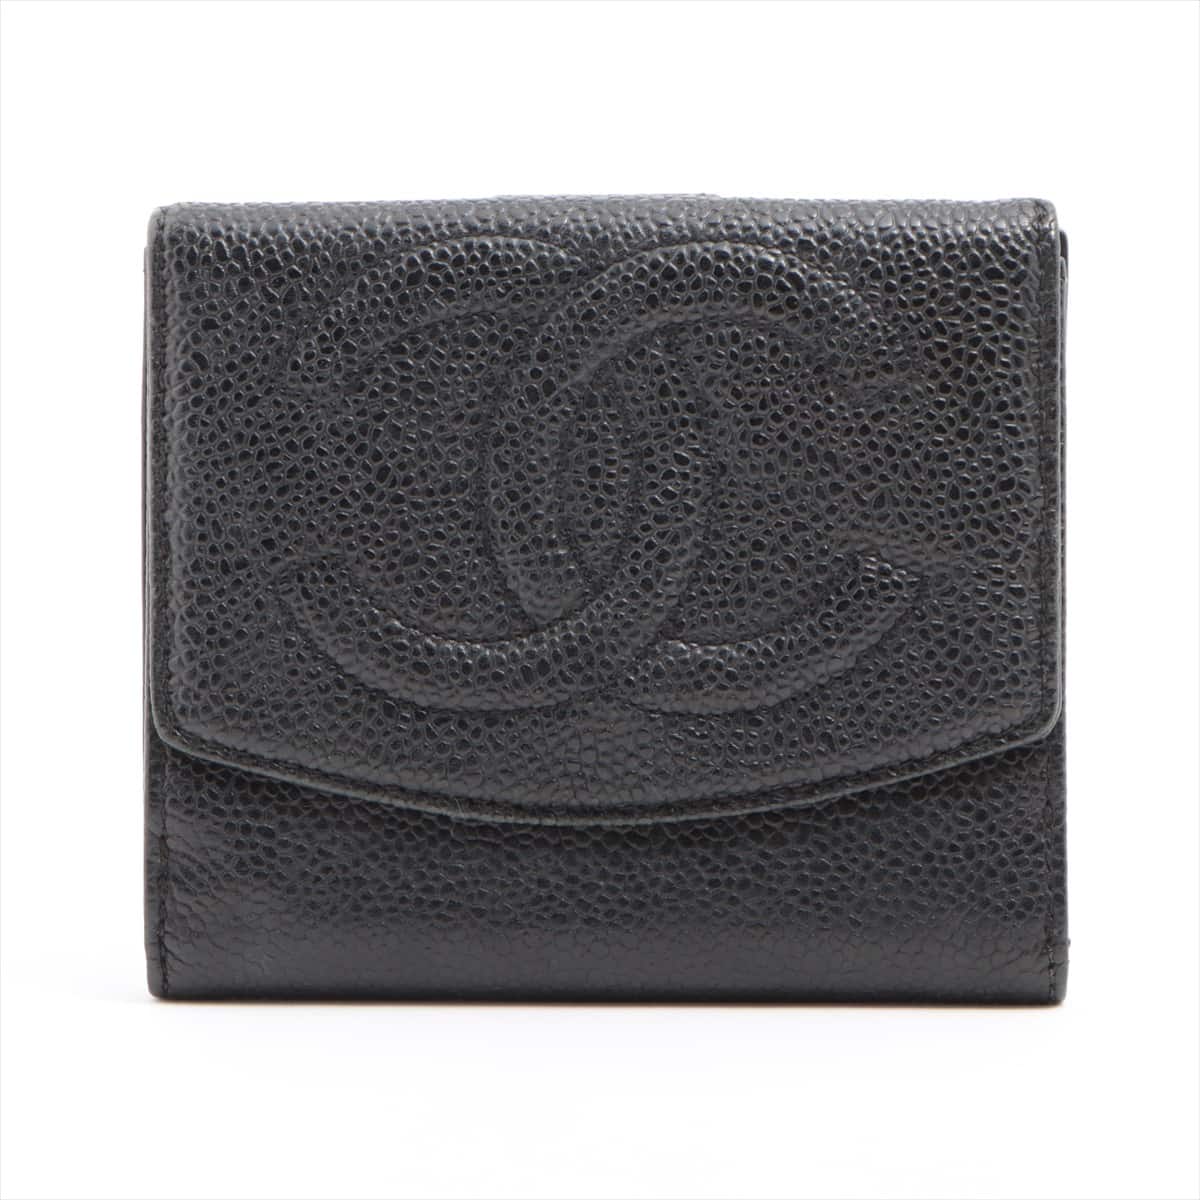 Chanel Coco Mark Caviarskin Wallet Black Gold Metal fittings 3XXXXXX